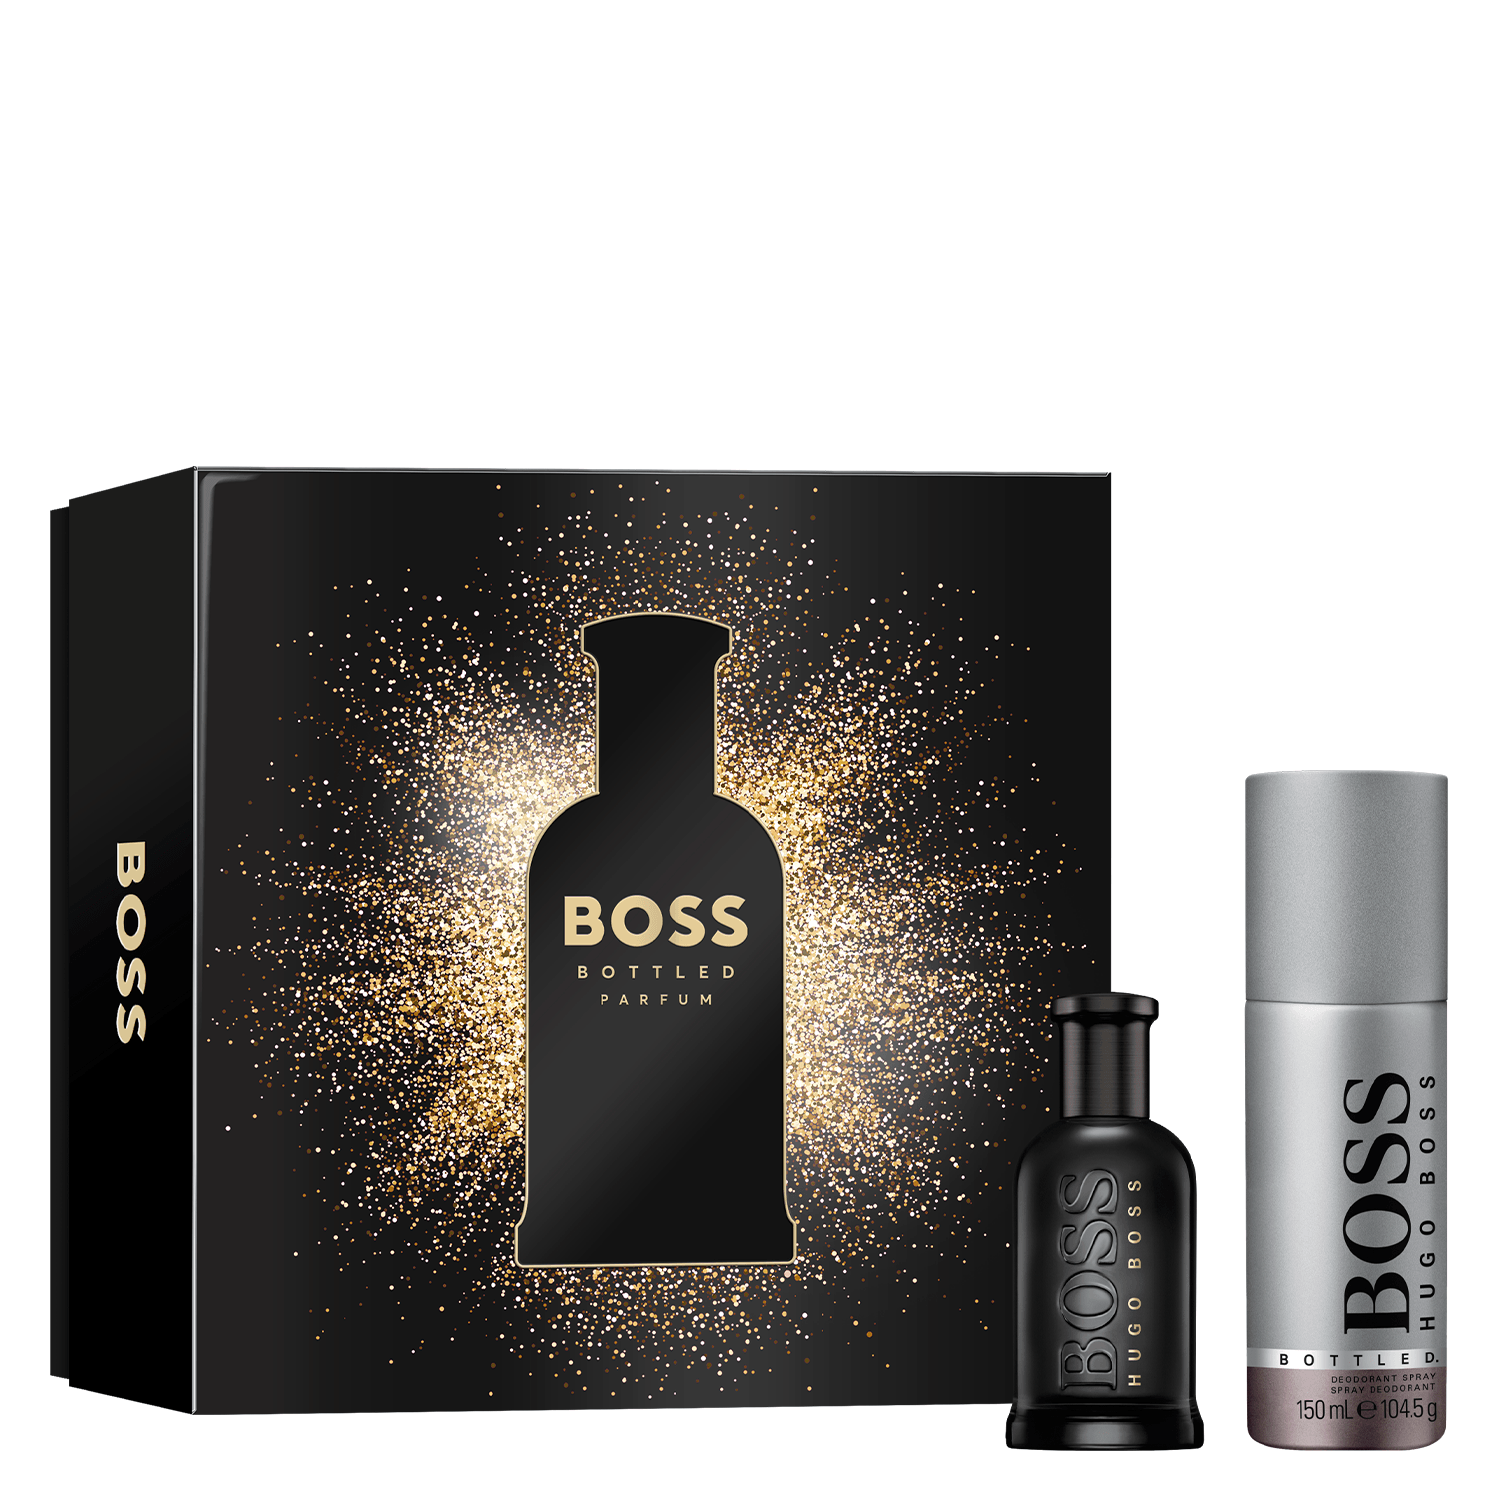 Product image from Boss Bottled - Parfum Kit